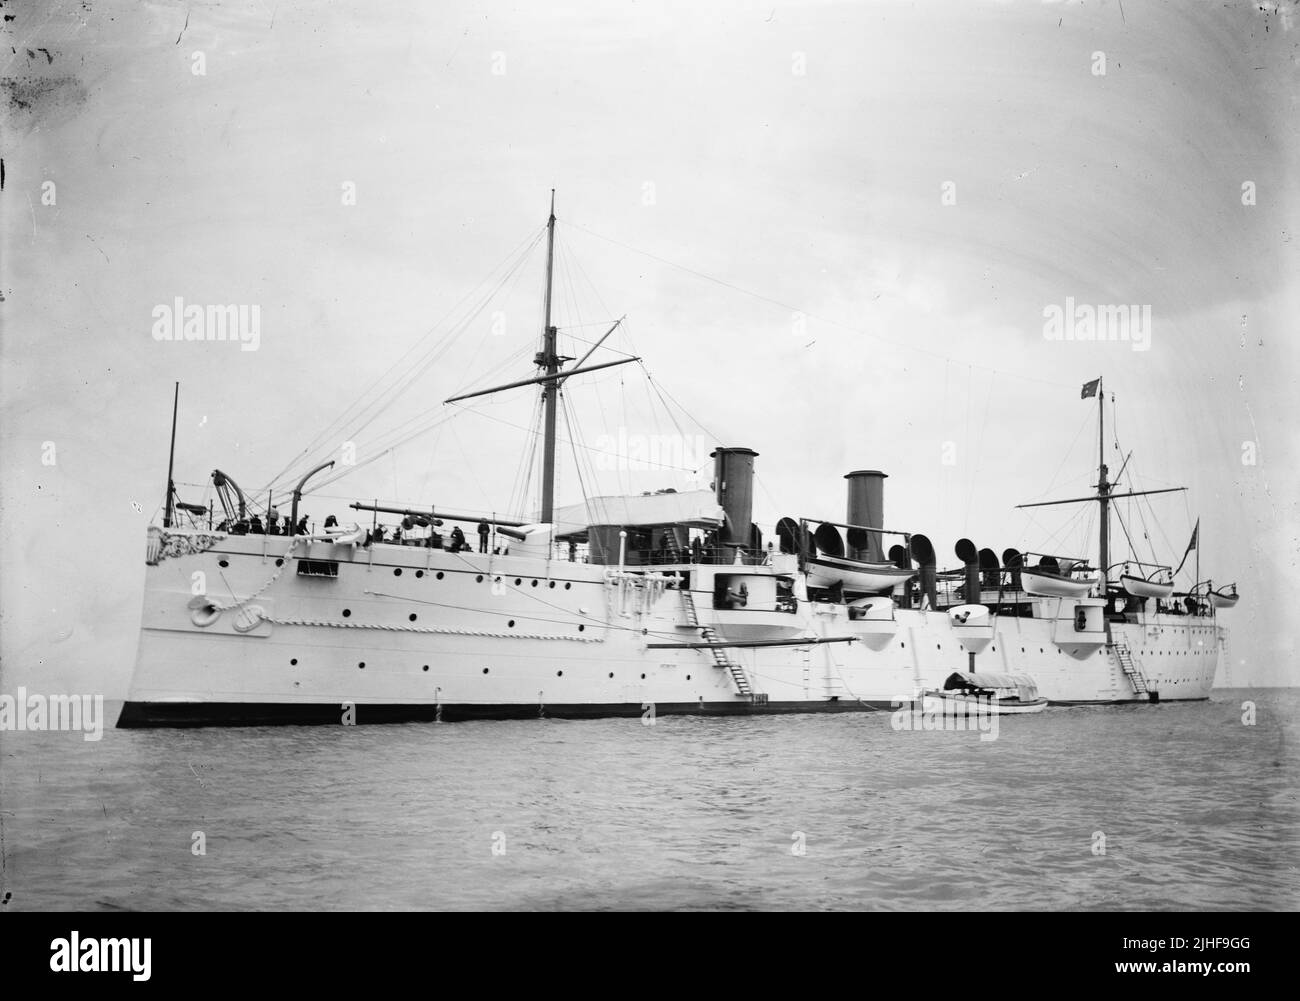 1880s battleship Black and White Stock Photos & Images - Alamy